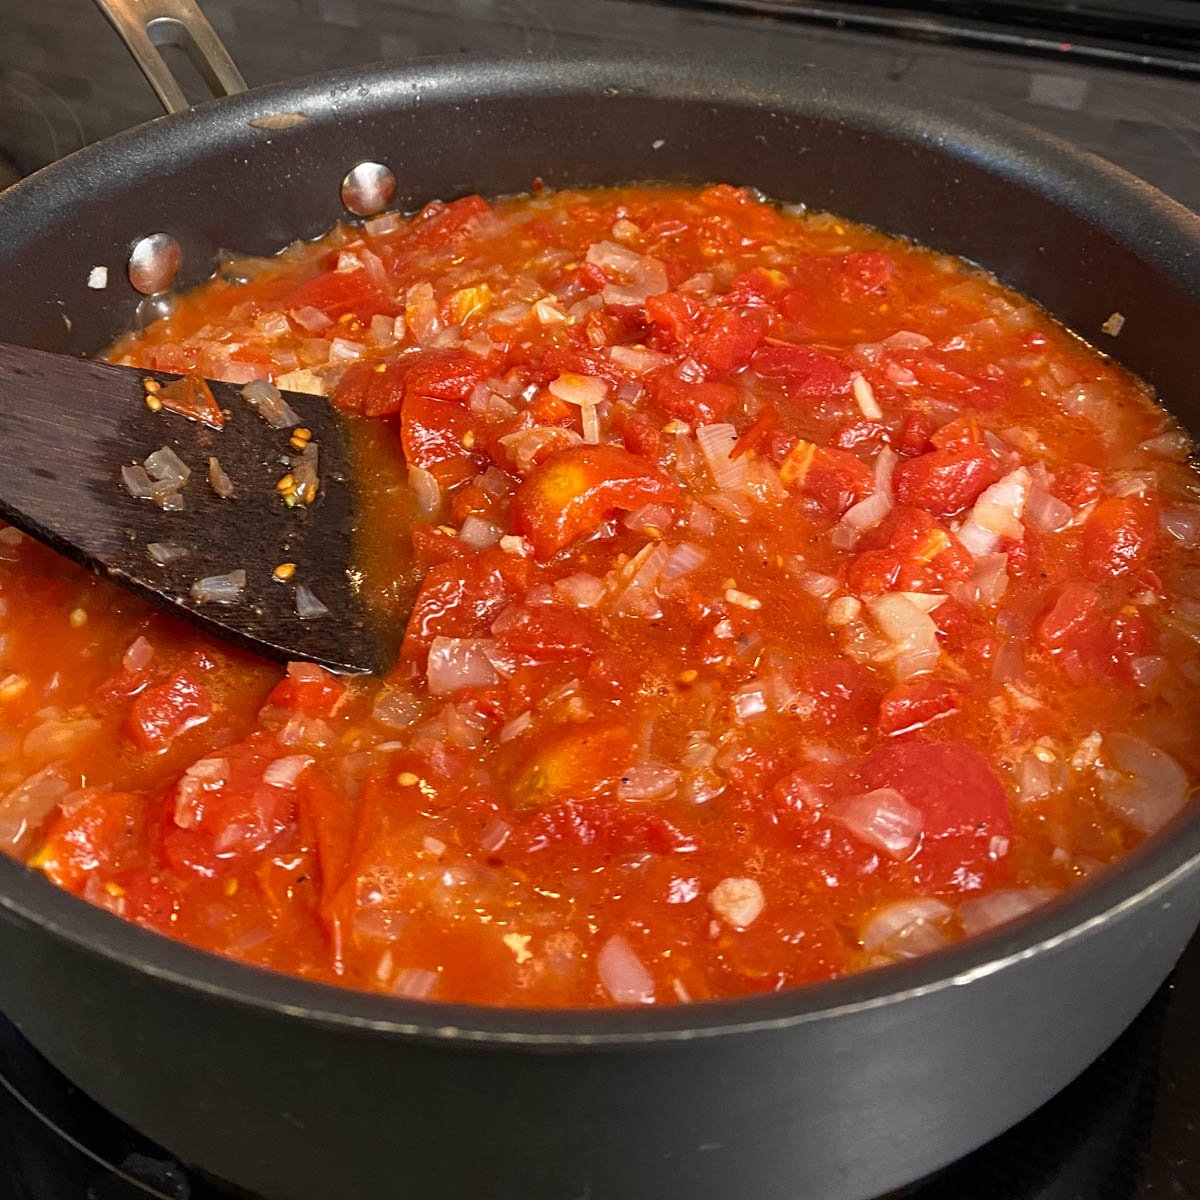 Skillet of tomato, onion vodka sauce simmering.